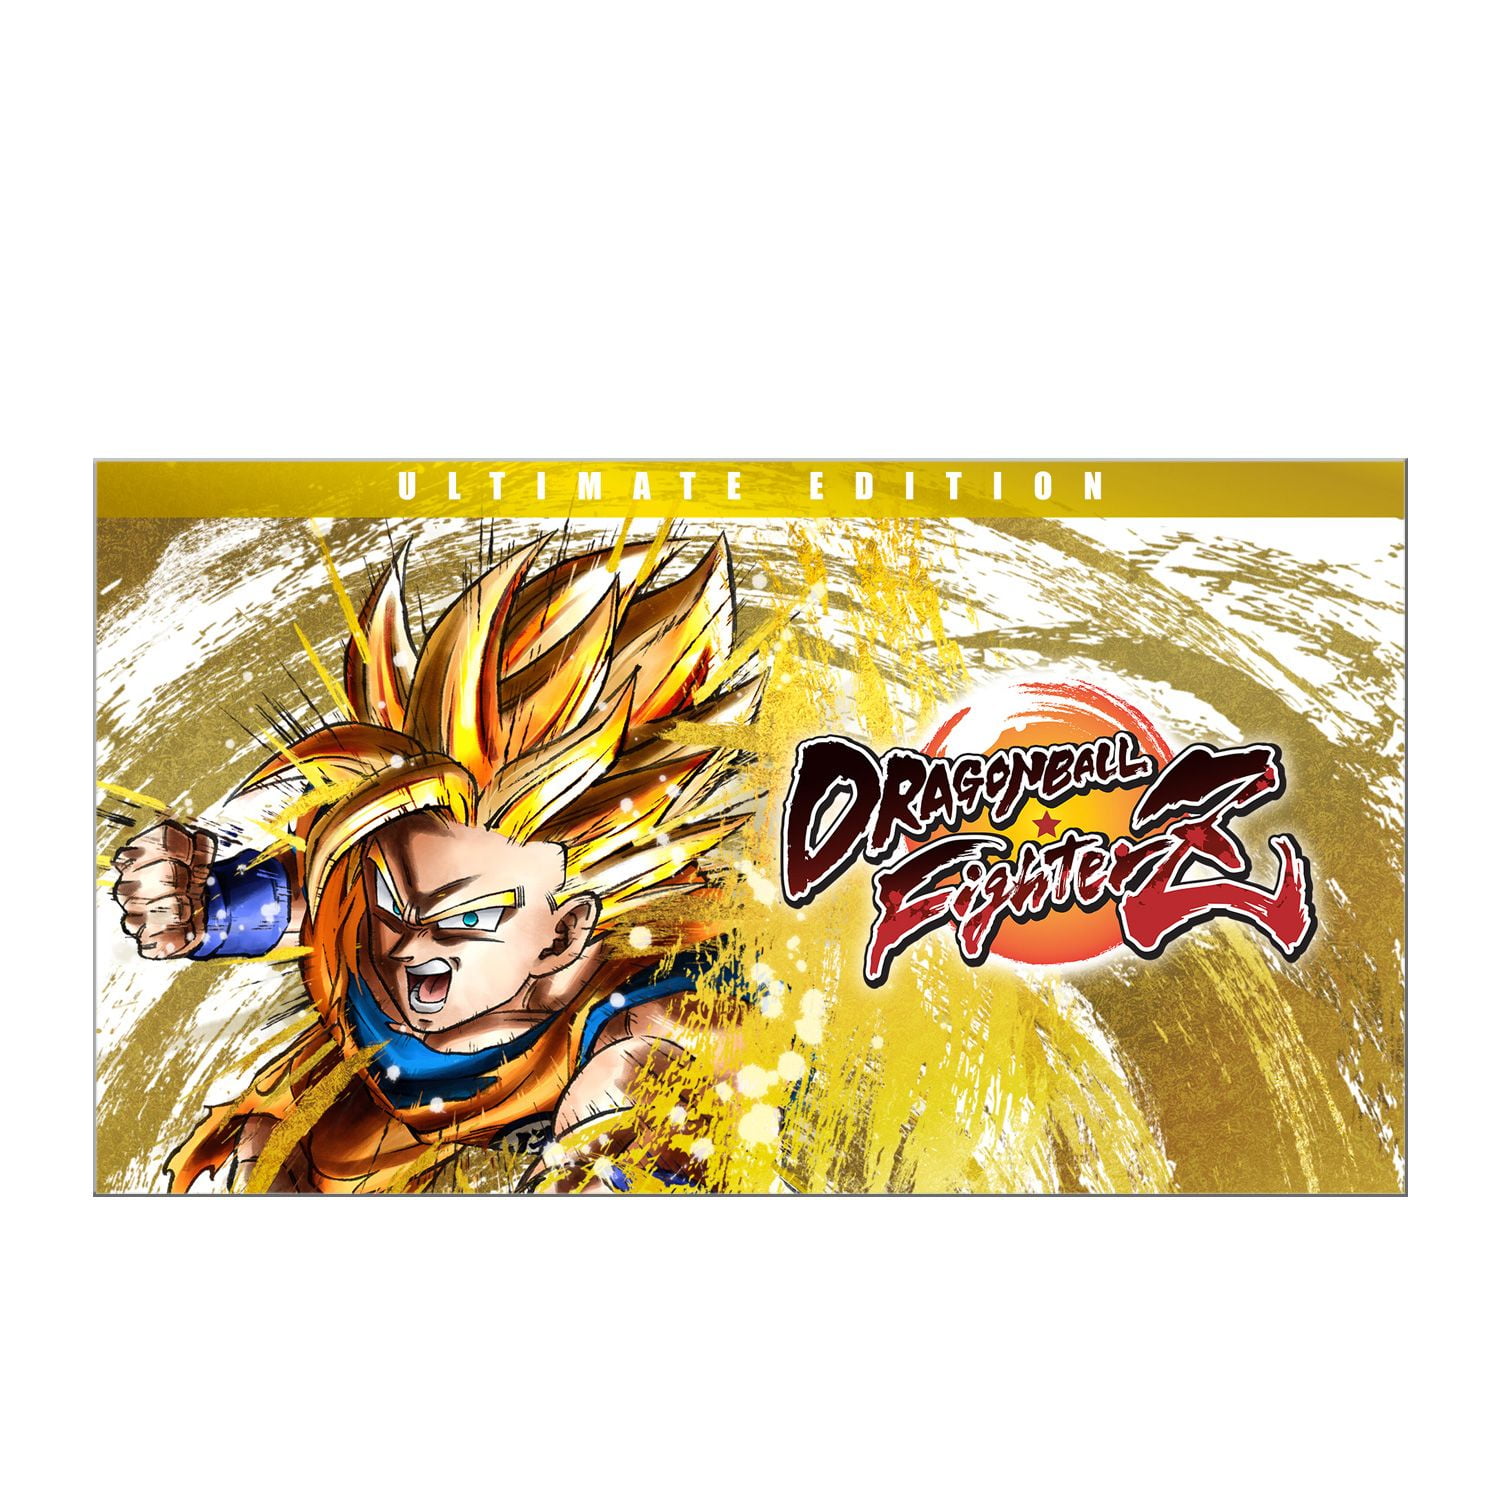 DRAGON BALL FIGHTERZ - Goku for Nintendo Switch - Nintendo Official Site